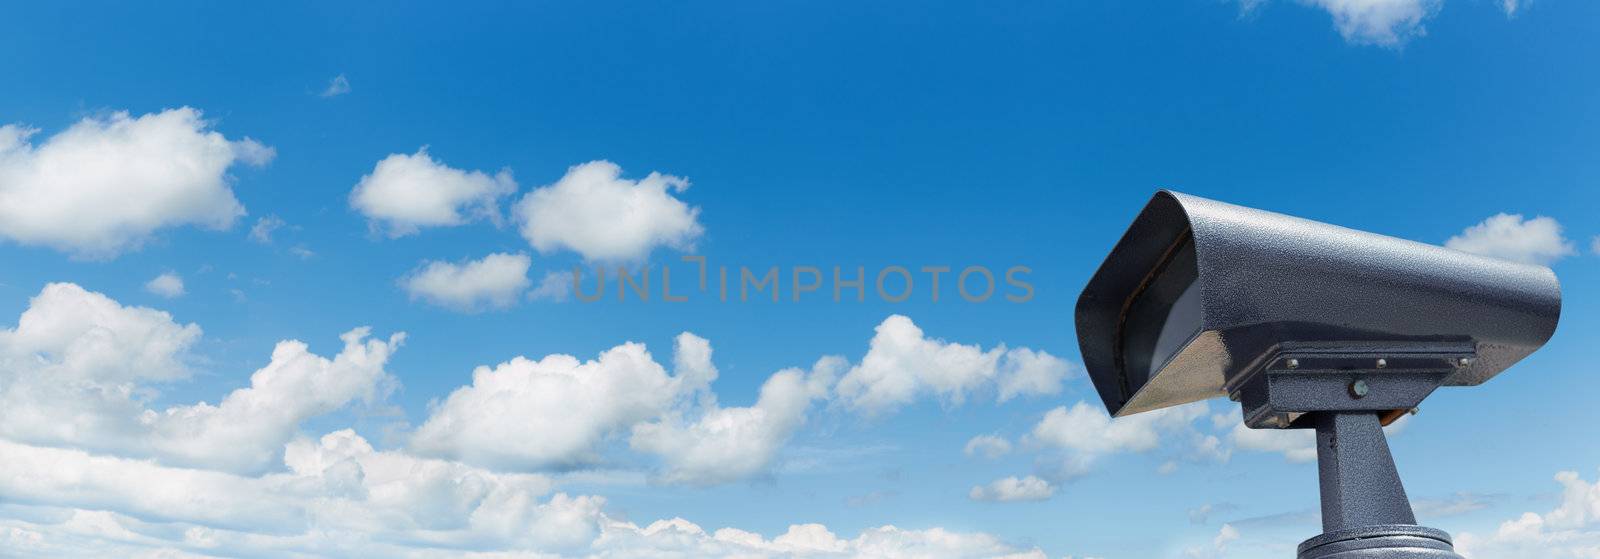 clean binoculars on blue sky background, selective focus